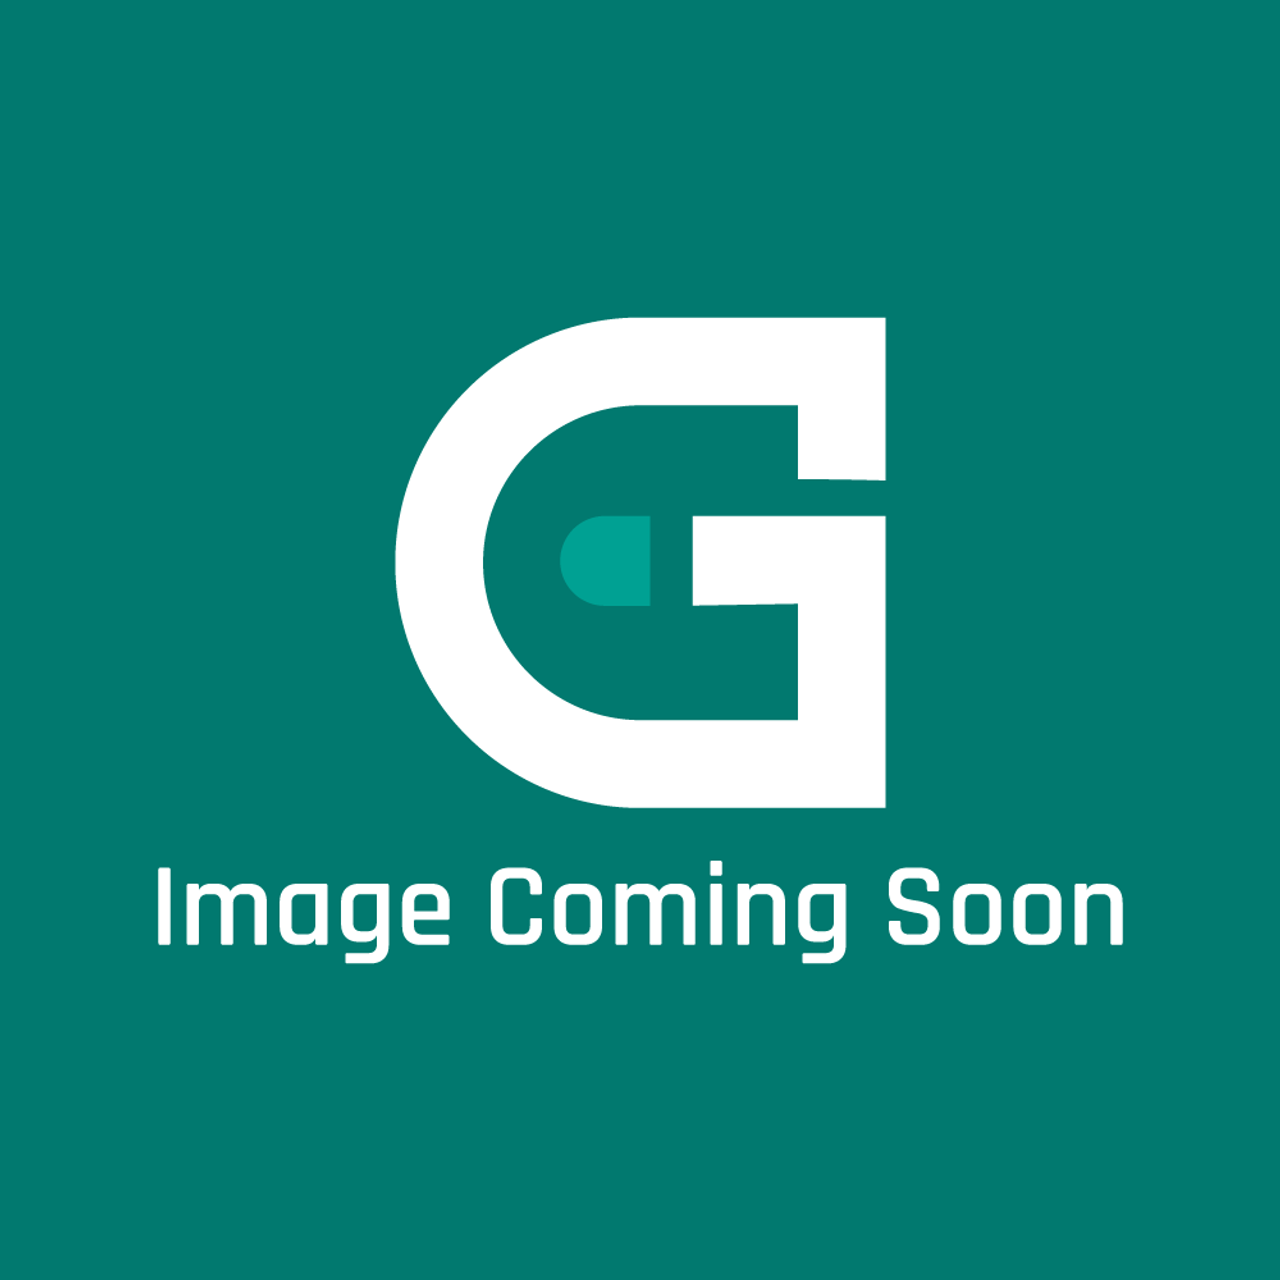 Star Mfg G5Z16155 - Burner Cover Plate - Image Coming Soon!